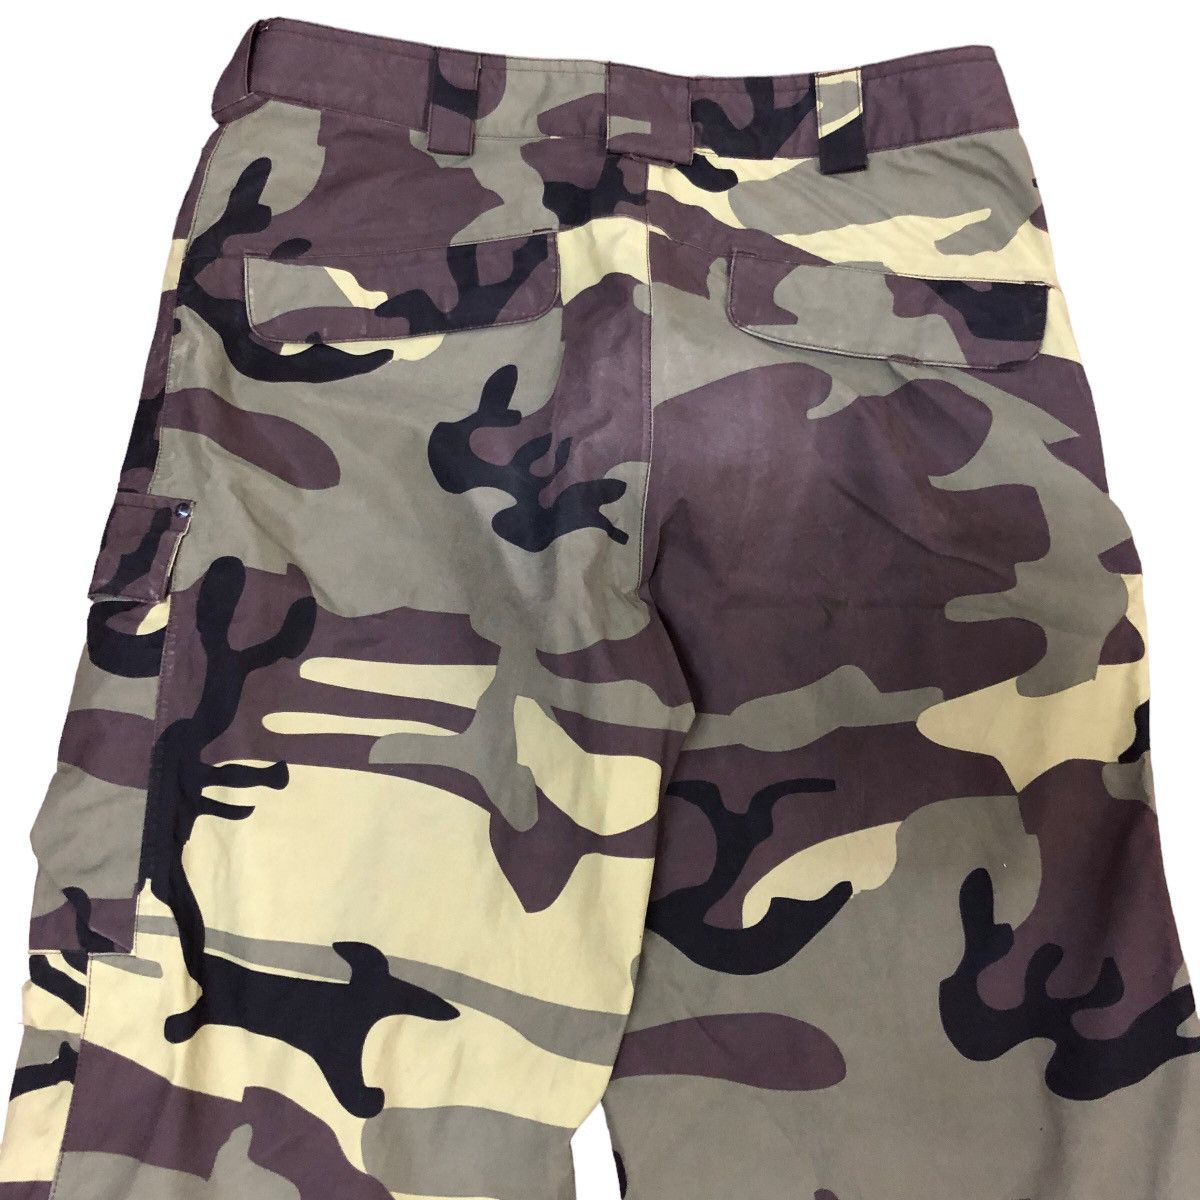 Ronin burton dryride outerwear camouflage snowboard pants - 3